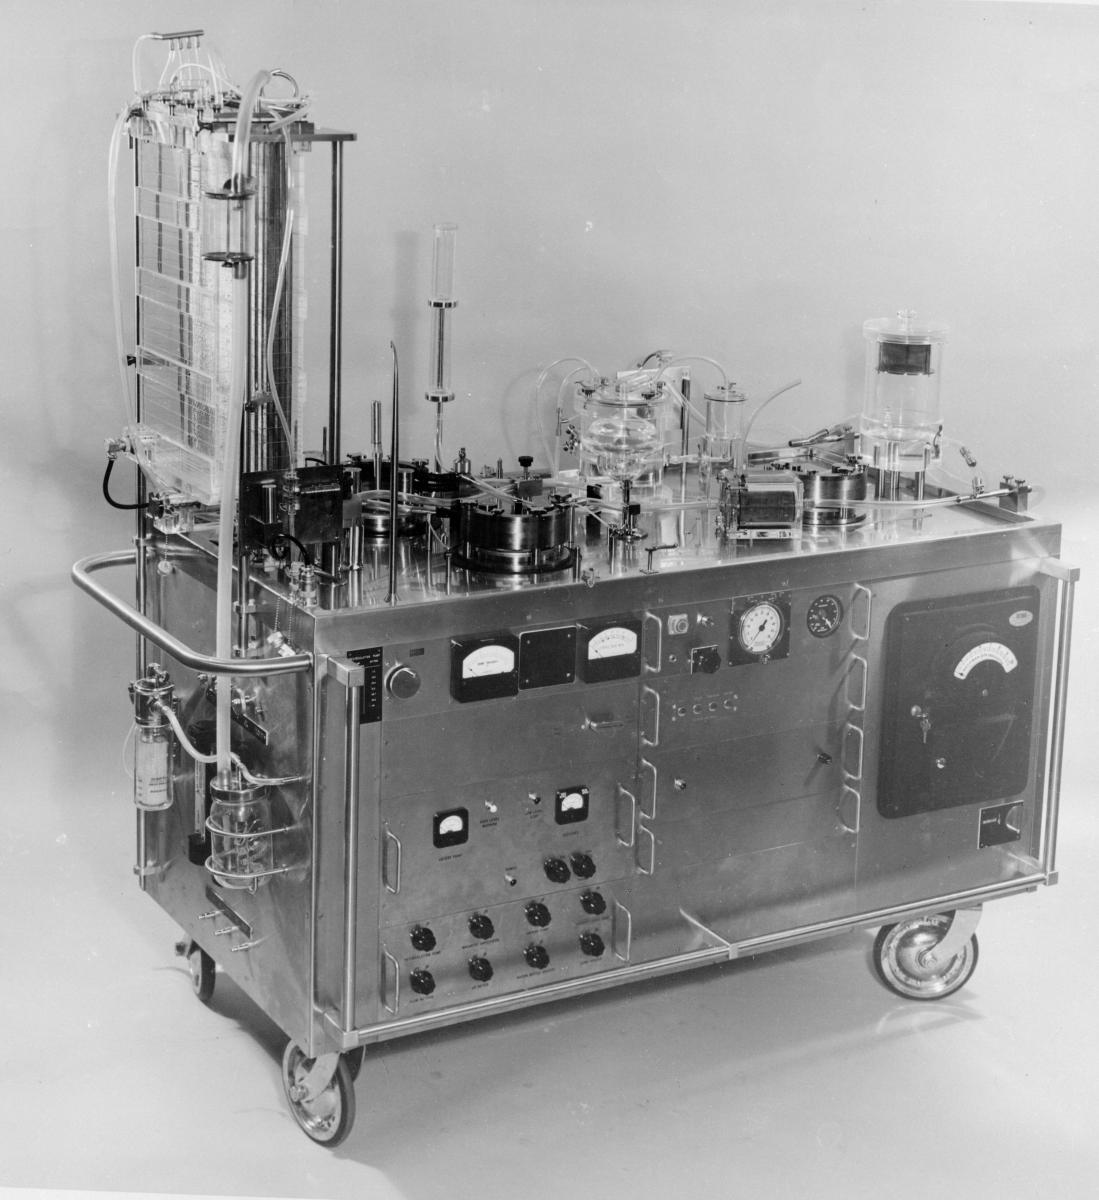 Original Heart-Lung Machine